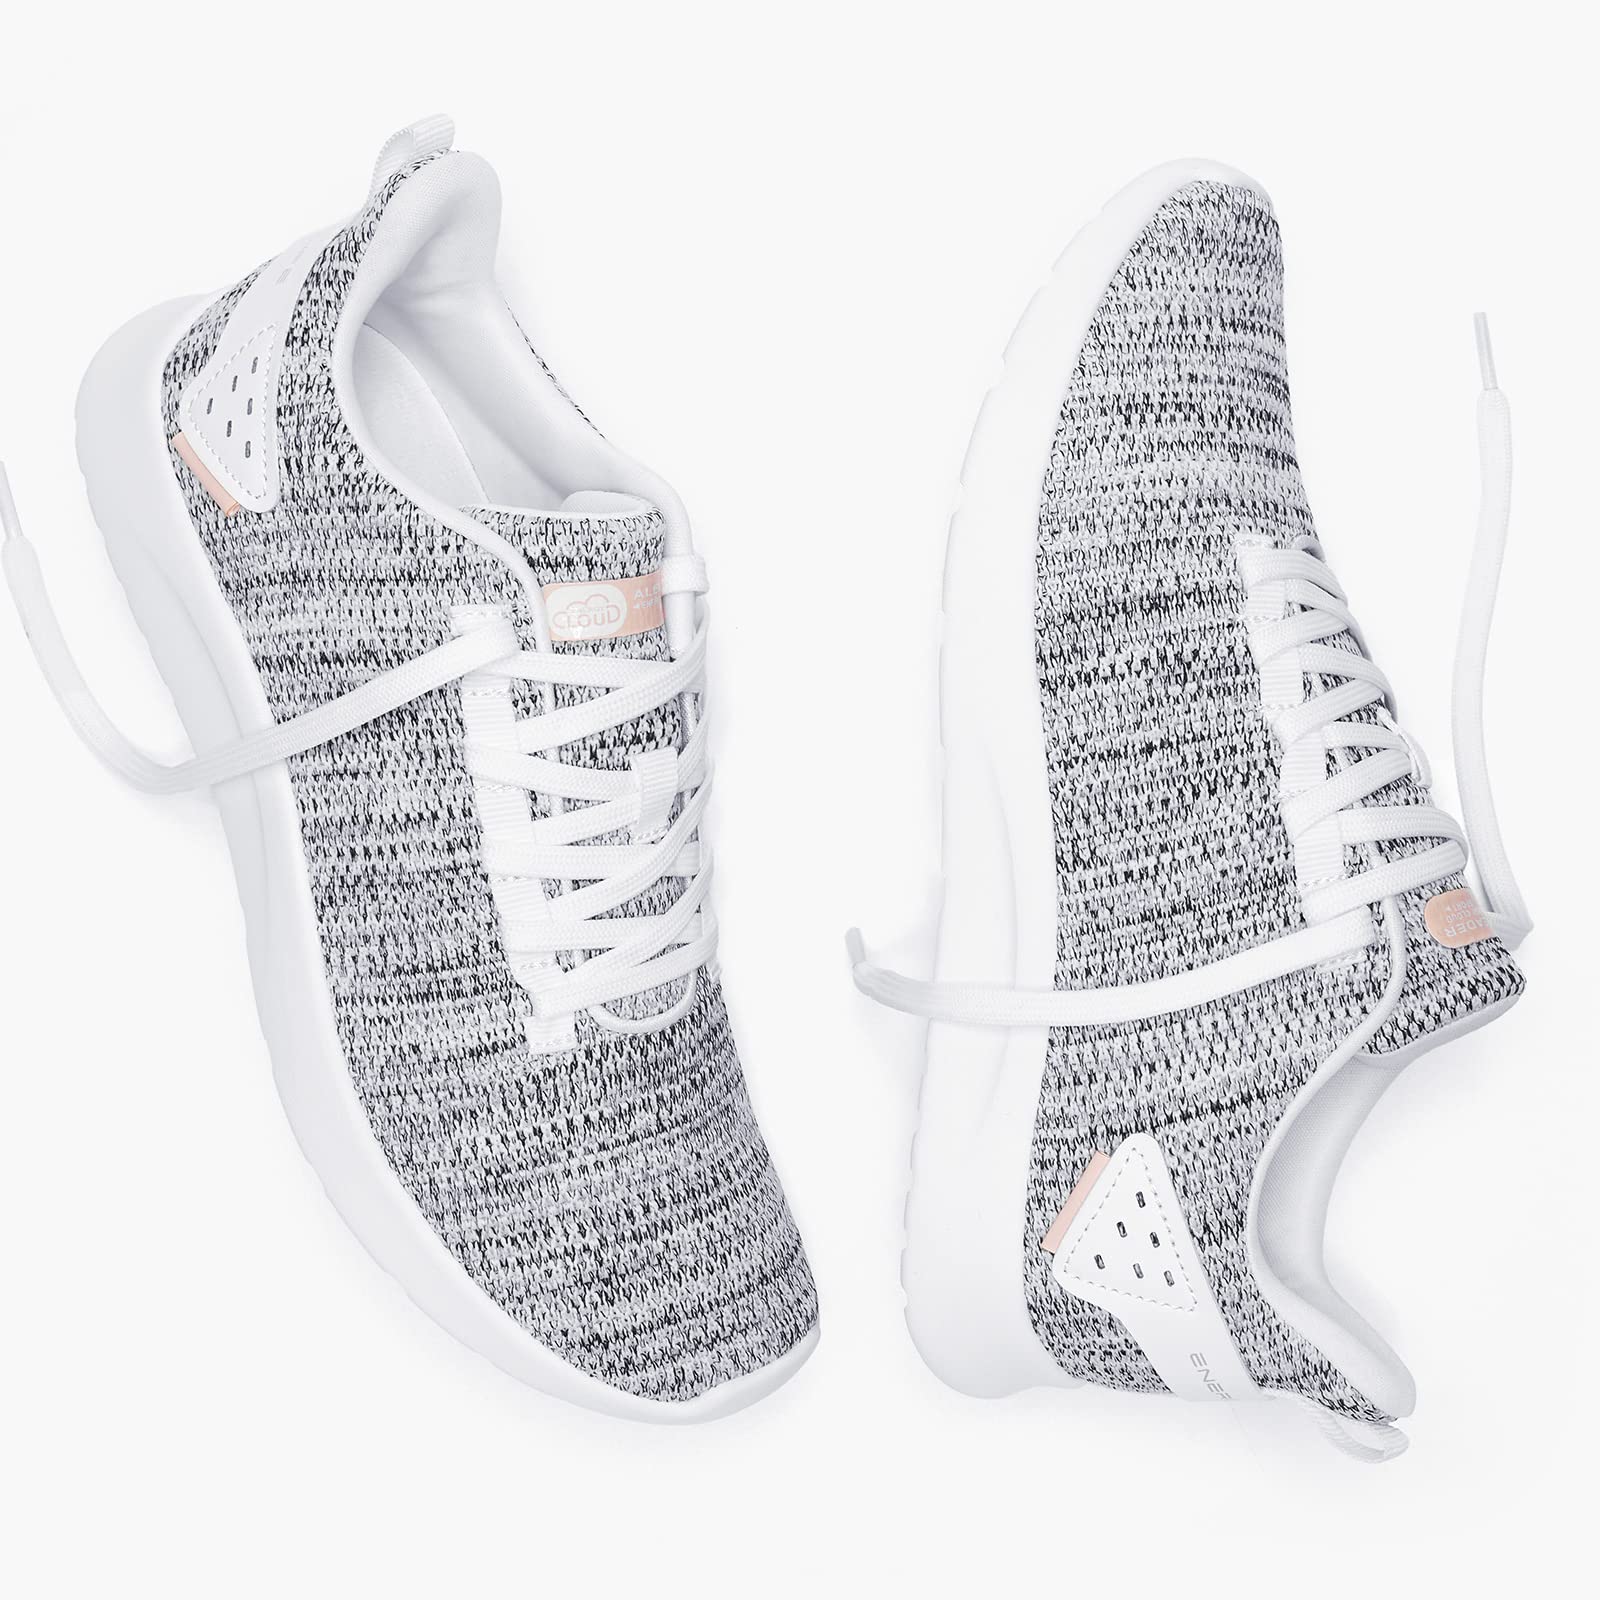 ALEADER Women's Energycloud Tennis Shoes Lightweight Running Shoes Fashion Walking Sneakers, Light Gray White Pink, 8 US